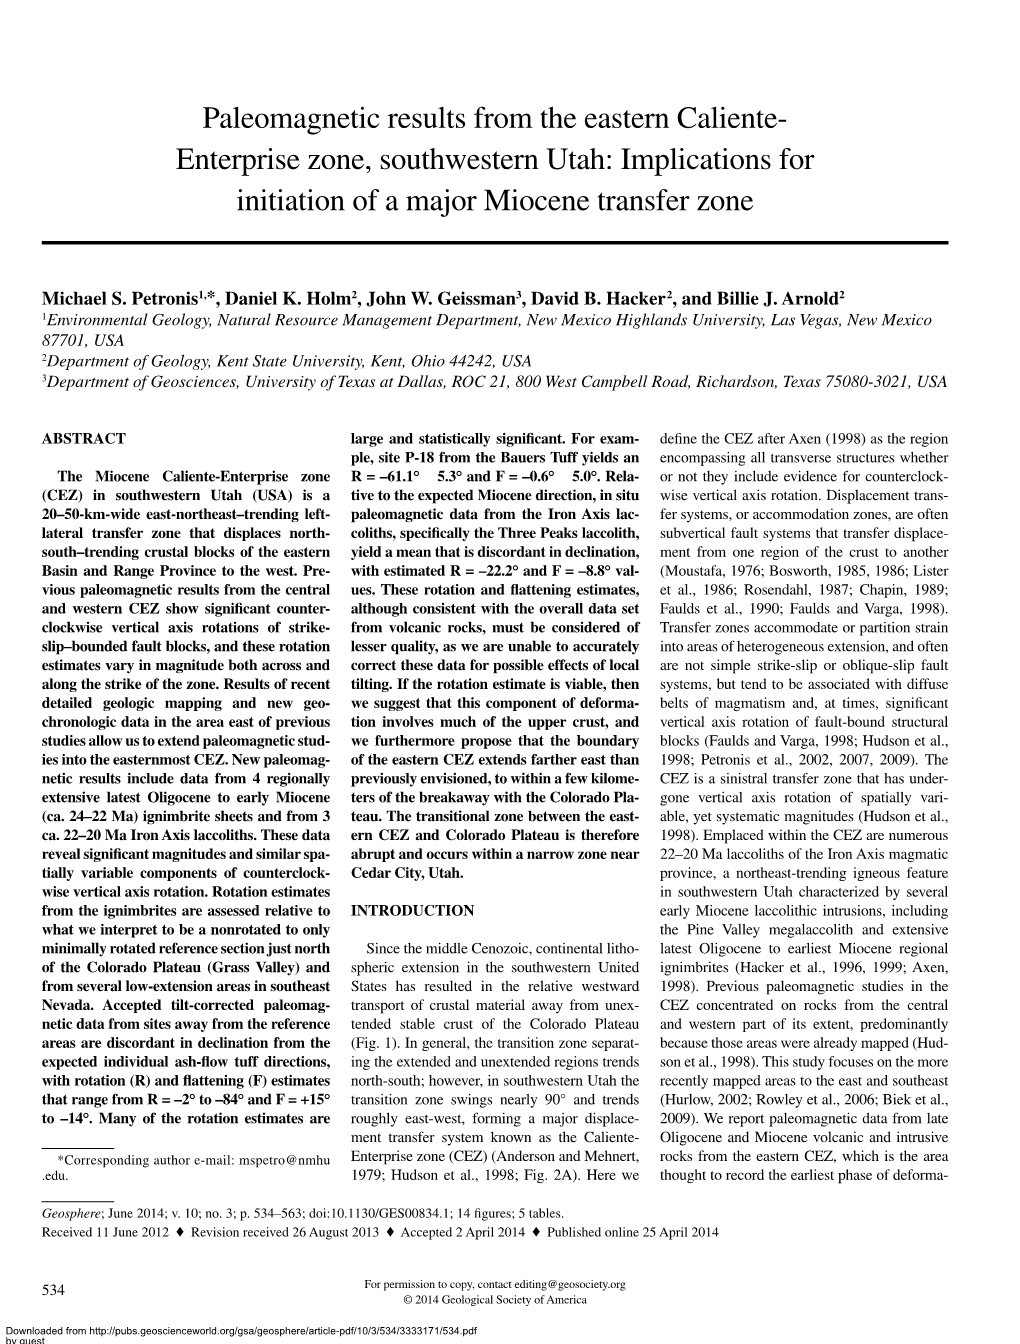 Enterprise Zone, Southwestern Utah: Implications for Initiation of a Major Miocene Transfer Zone